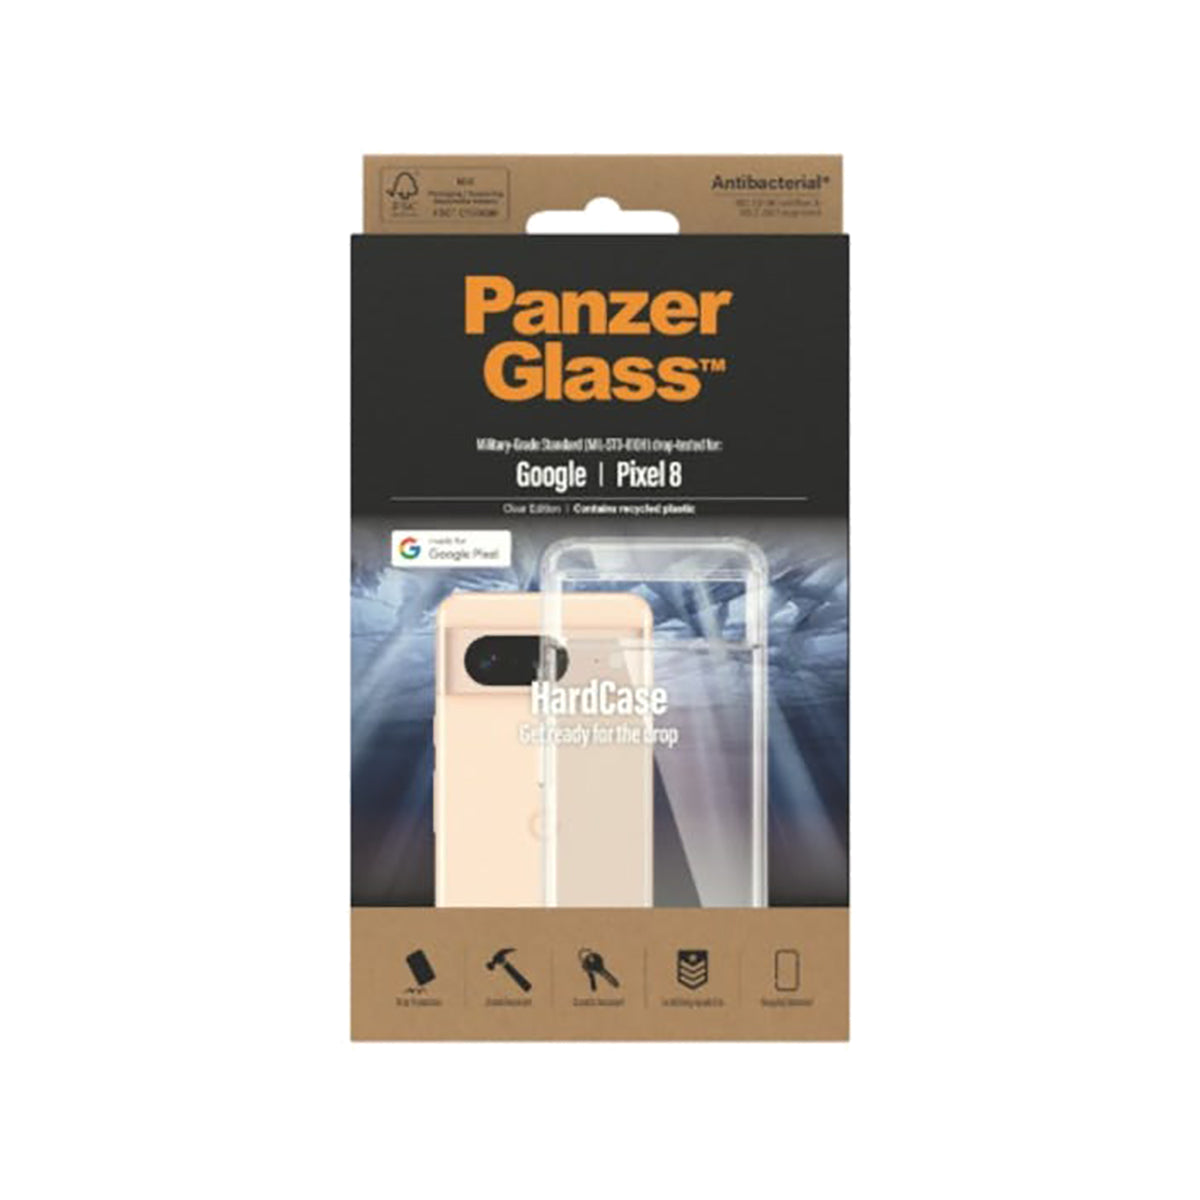 PanzerGlass Hardcase Phone Case For Google Pixel 8